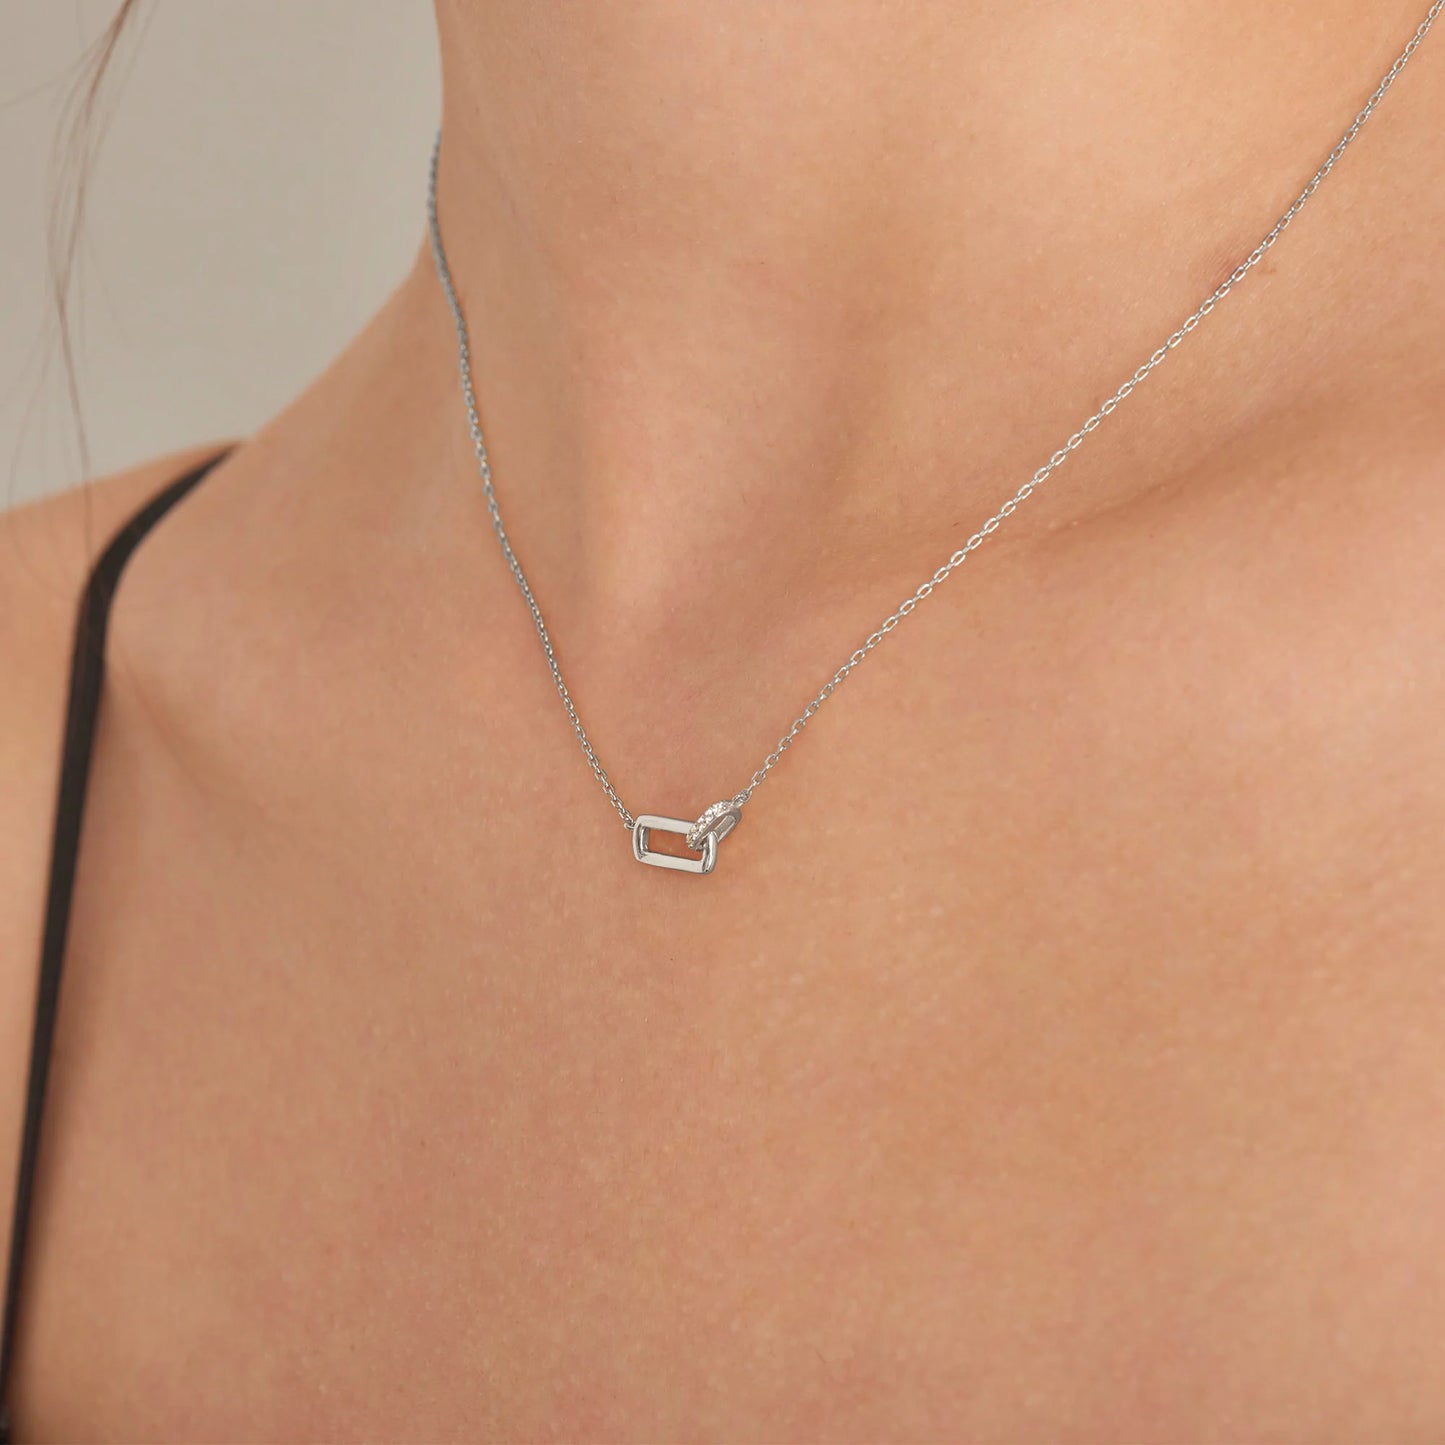 Ania Haie Rhodium Plated Silver Glam Interlocking Necklace